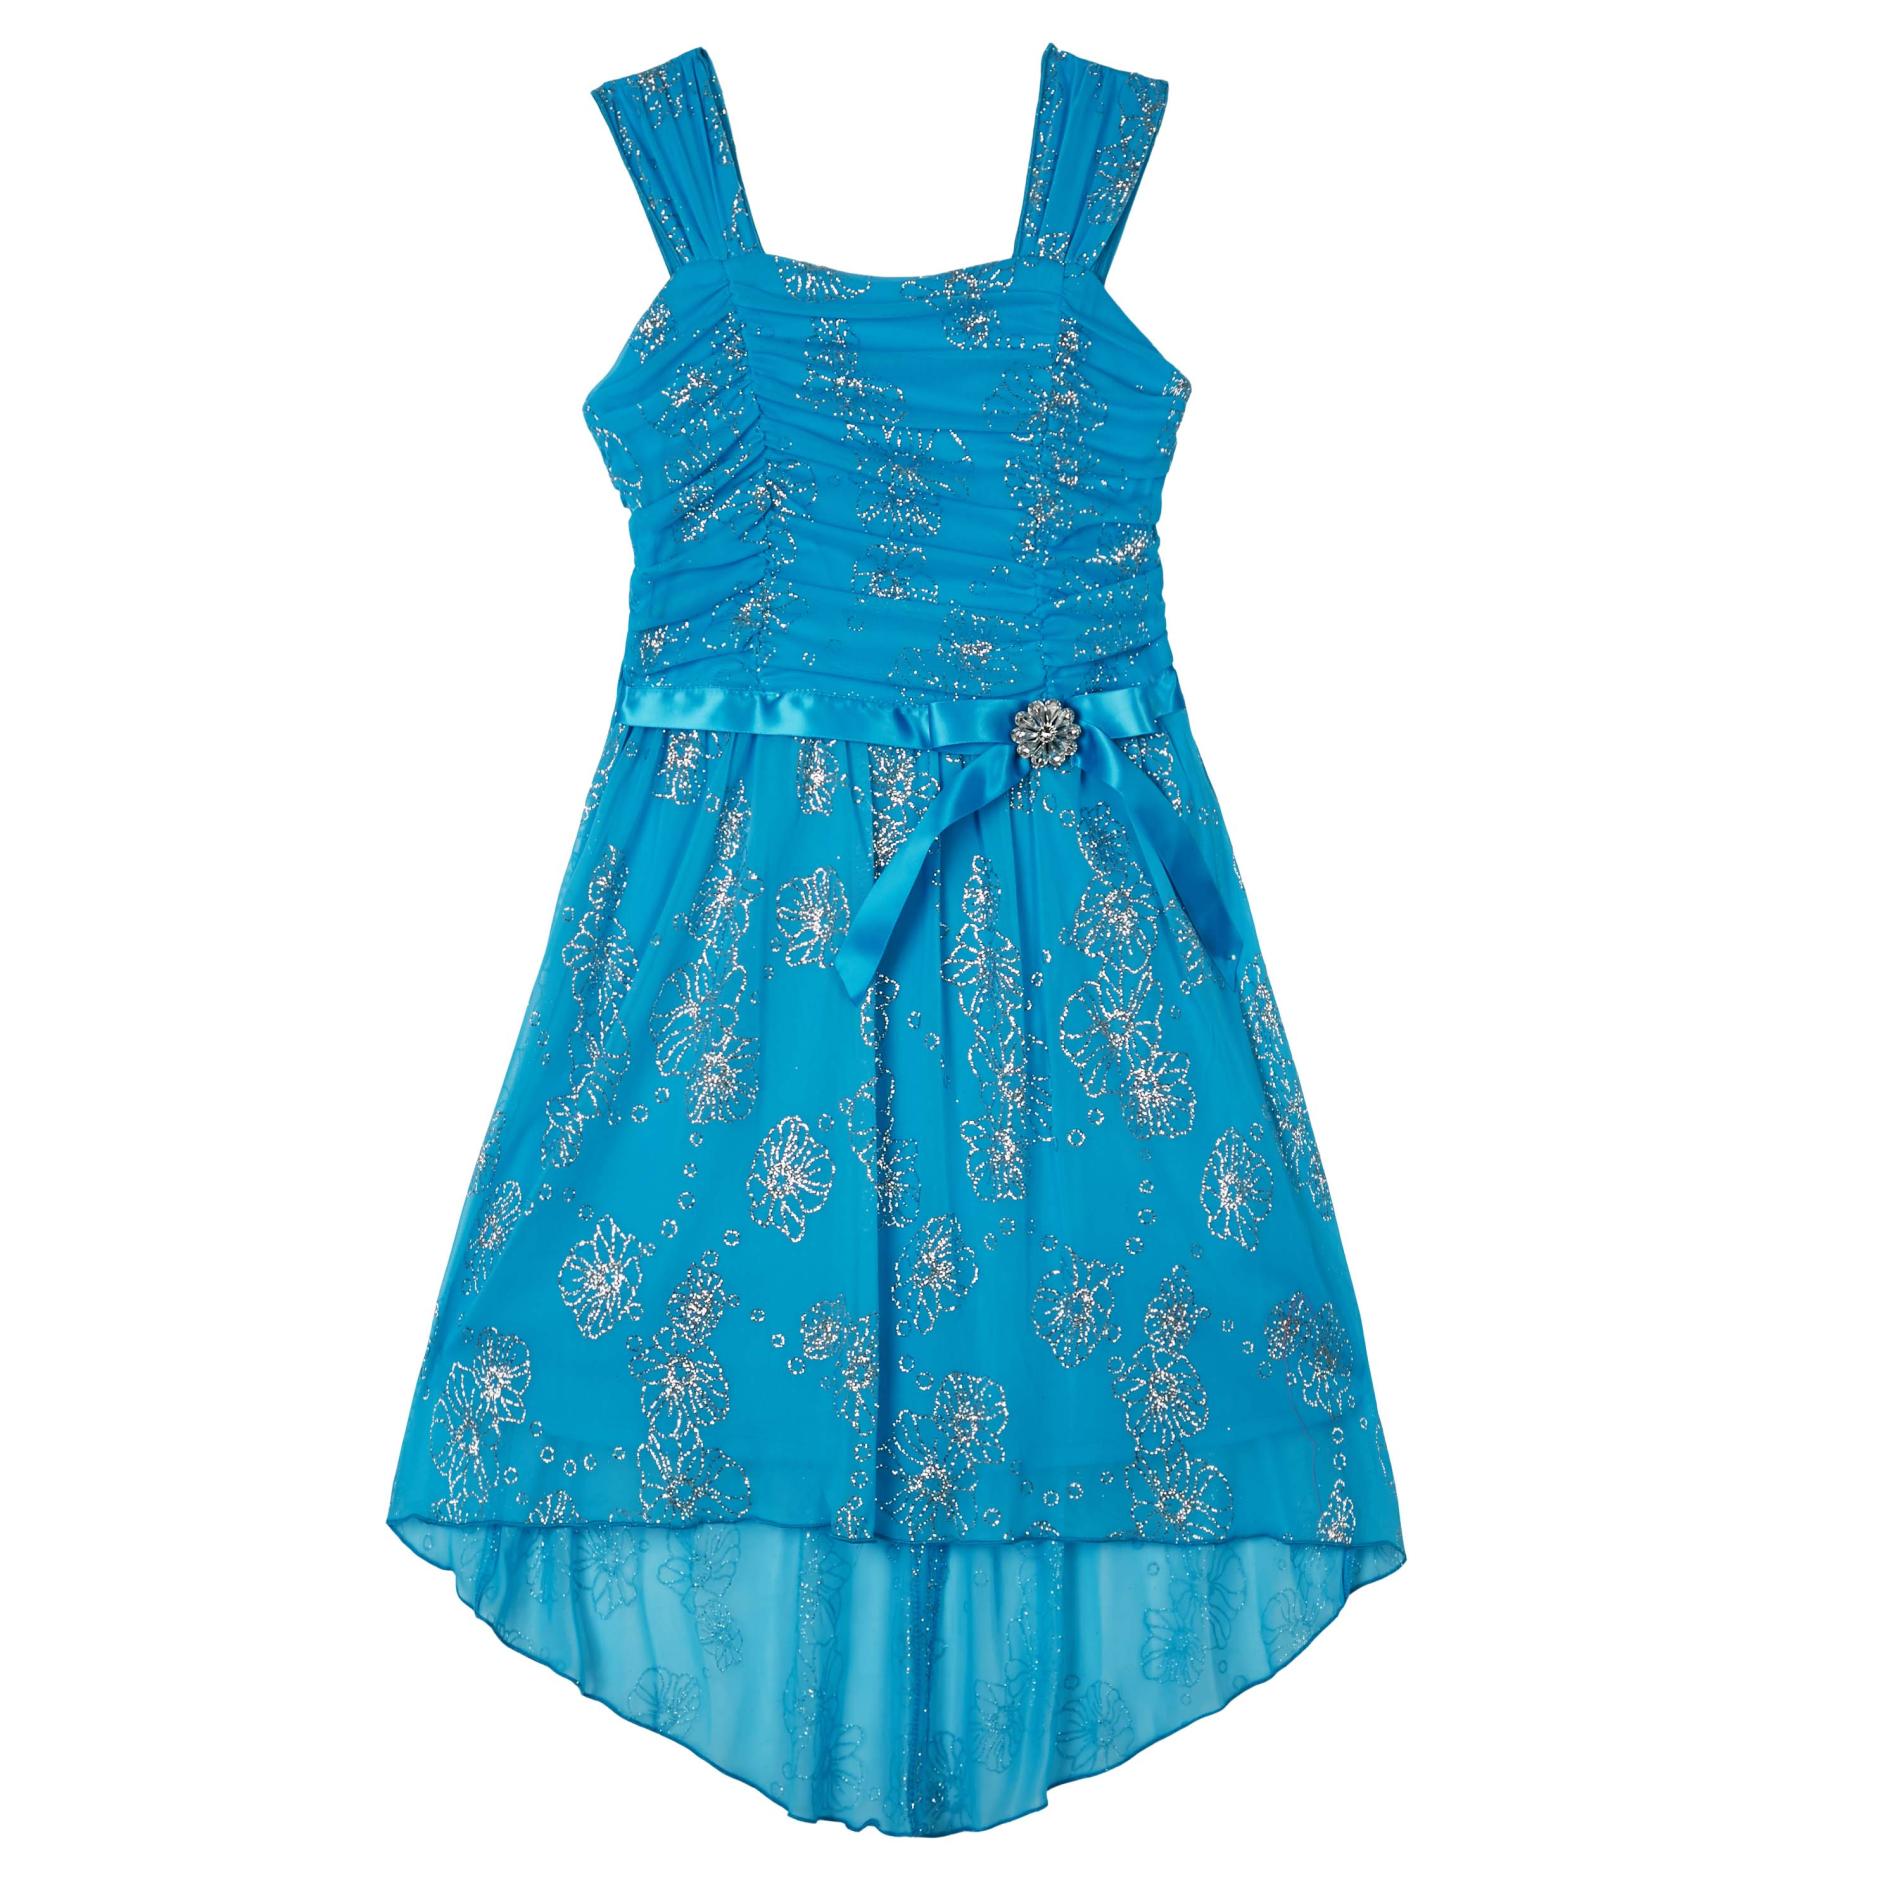 Amy's Closet Girl's Embellished Sleeveless Dress - Floral Print